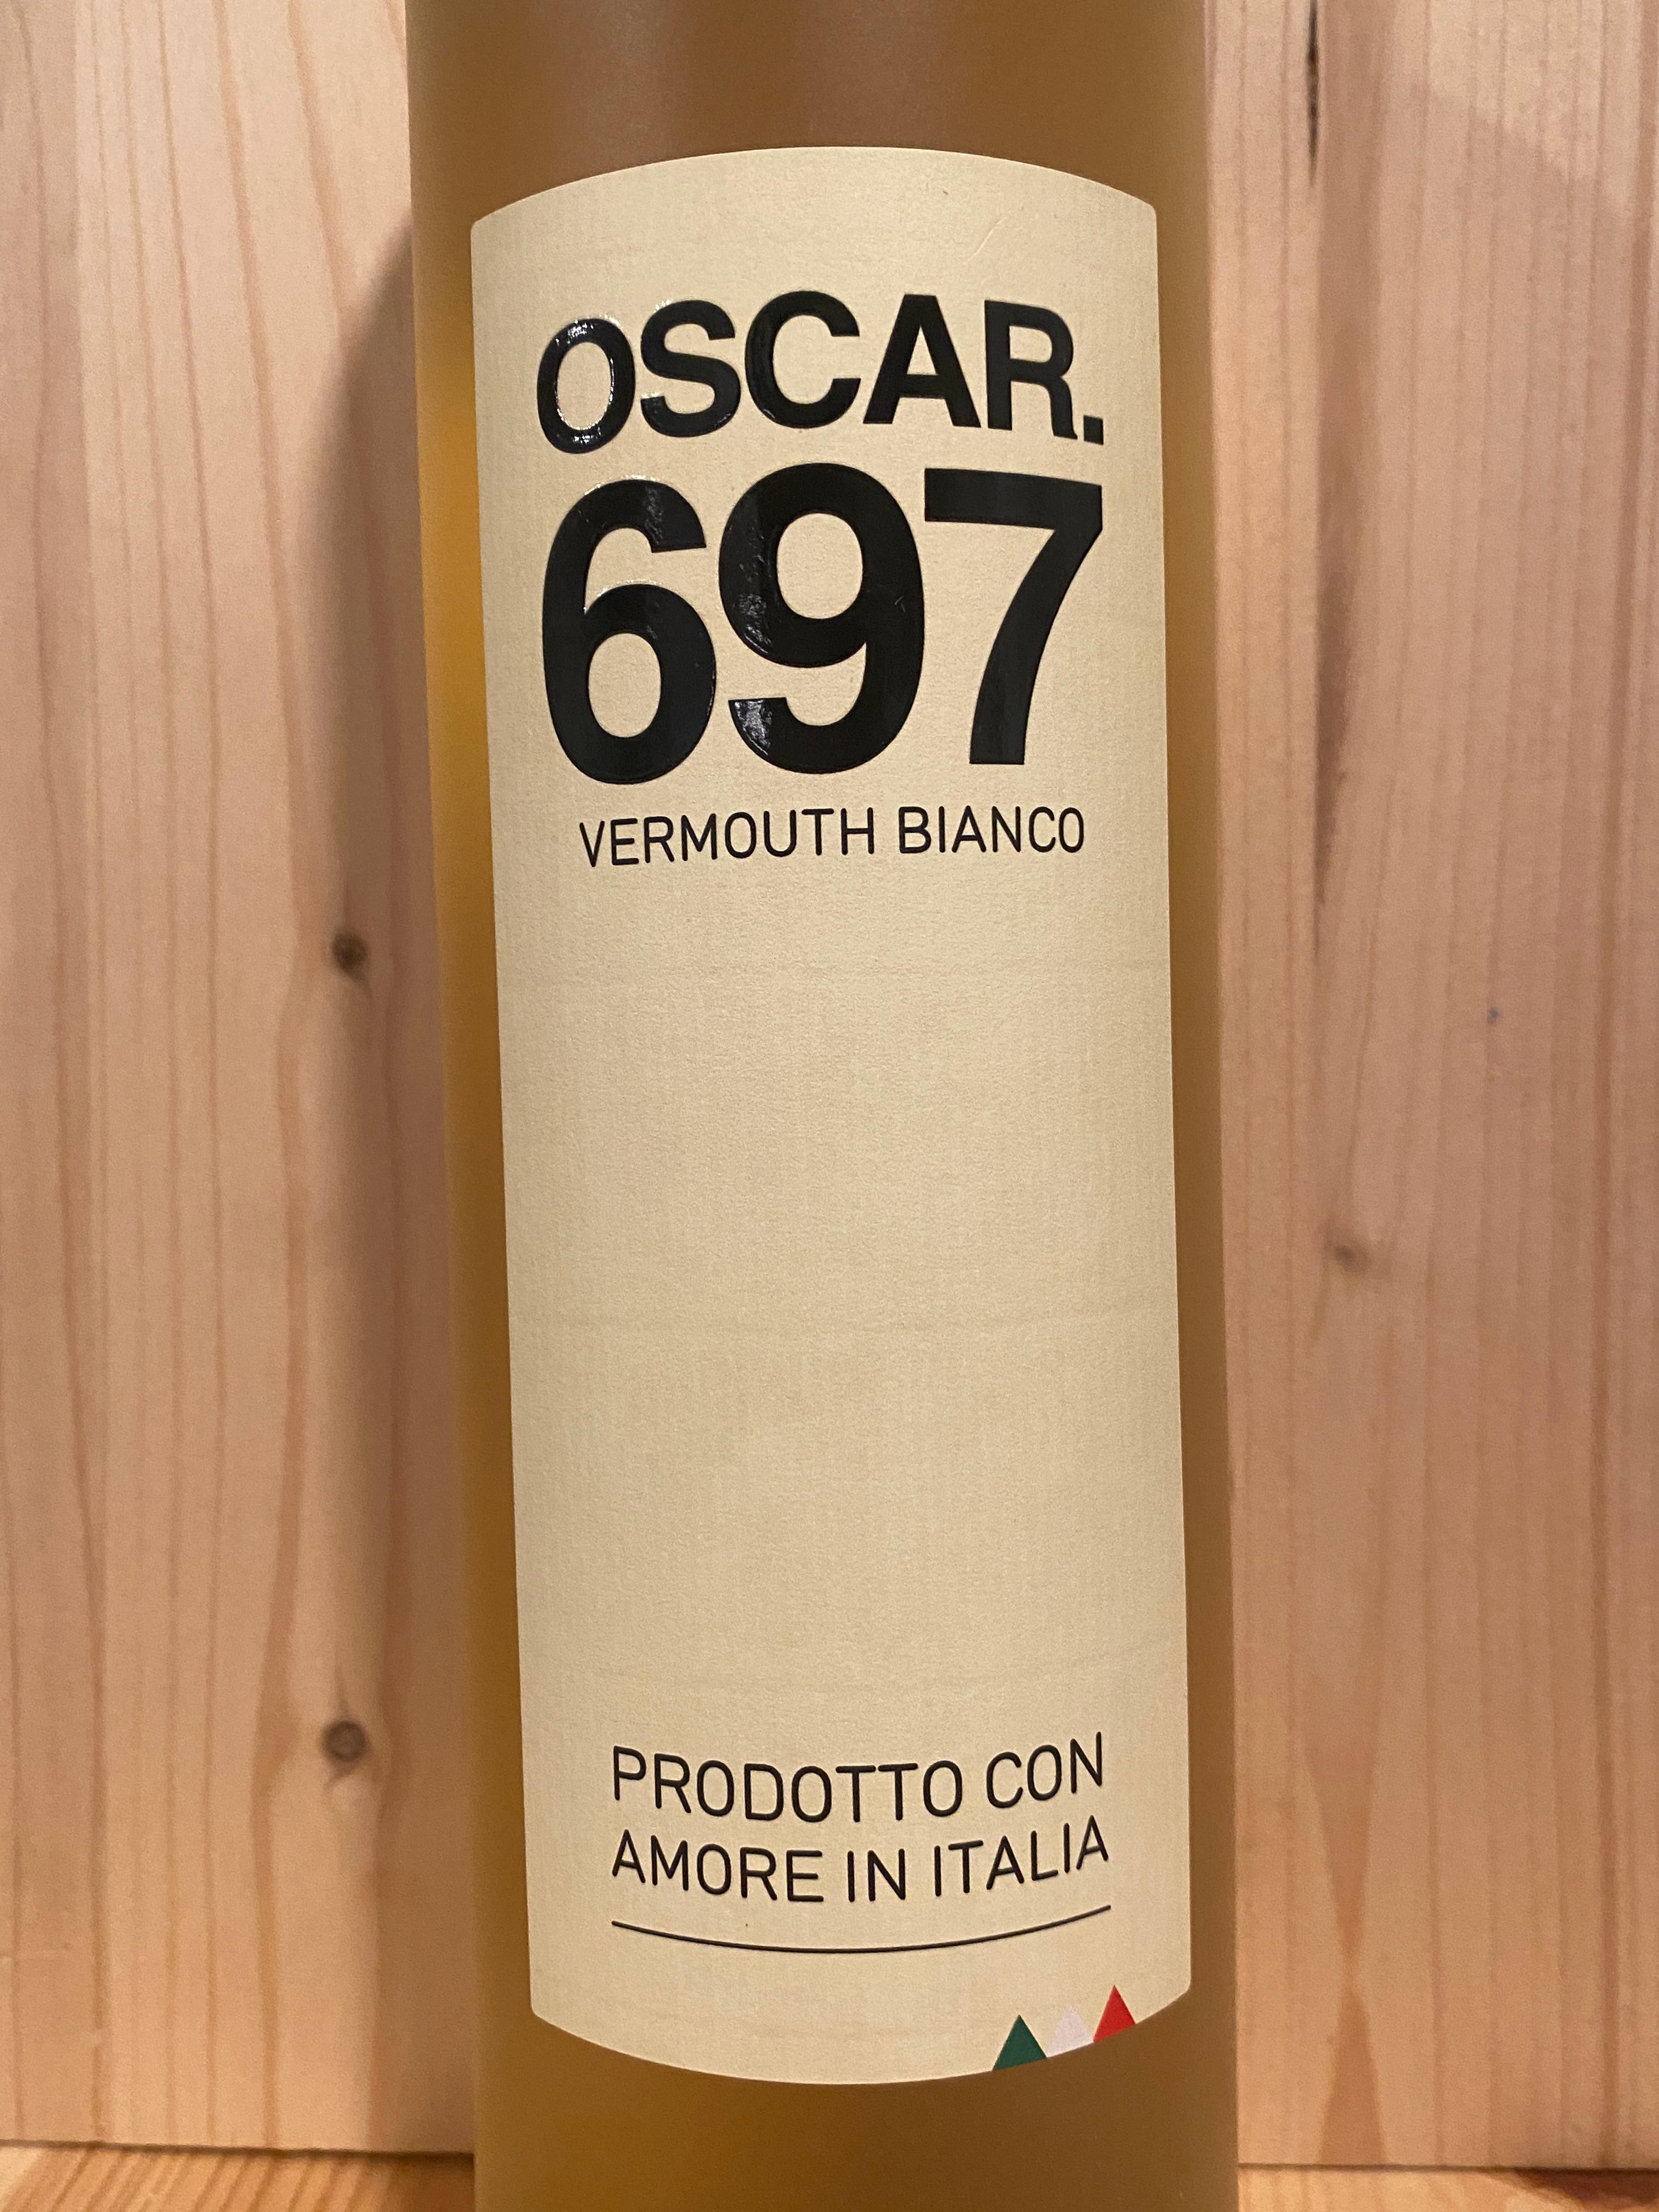 Oscar.697 Vermouth Bianco: Italy